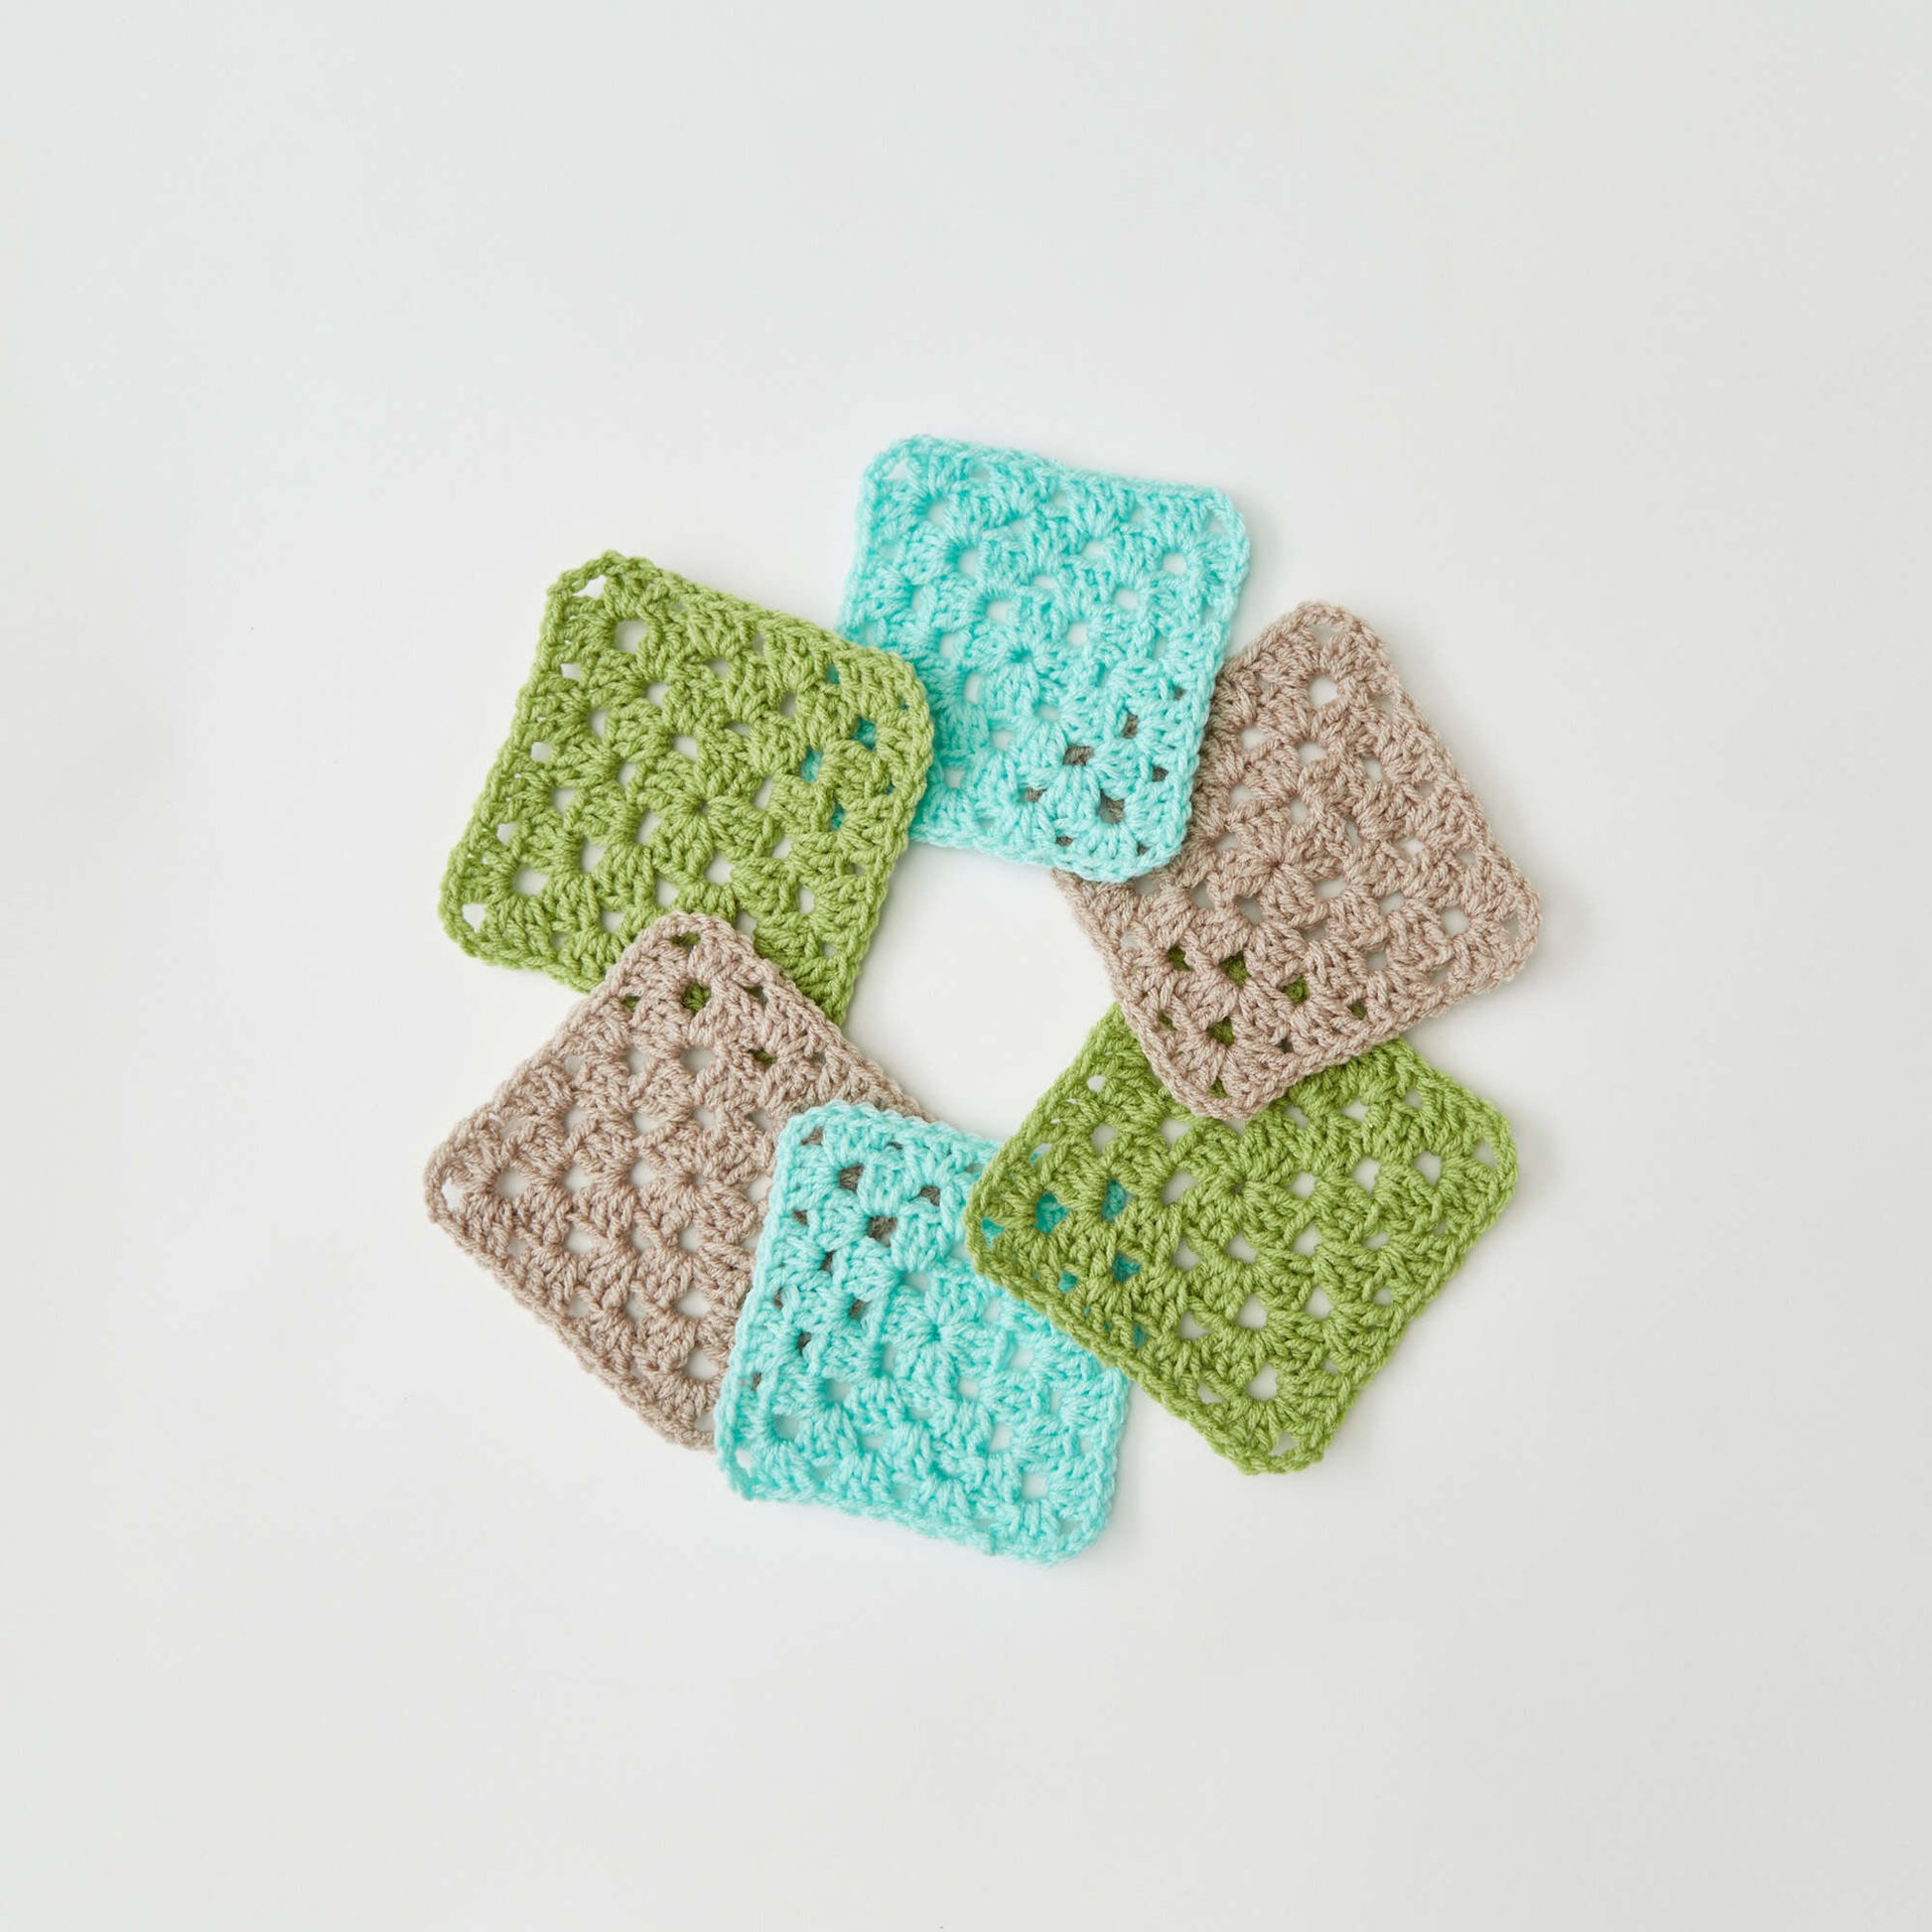 Beginner Crochet - Part One - Square Coaster